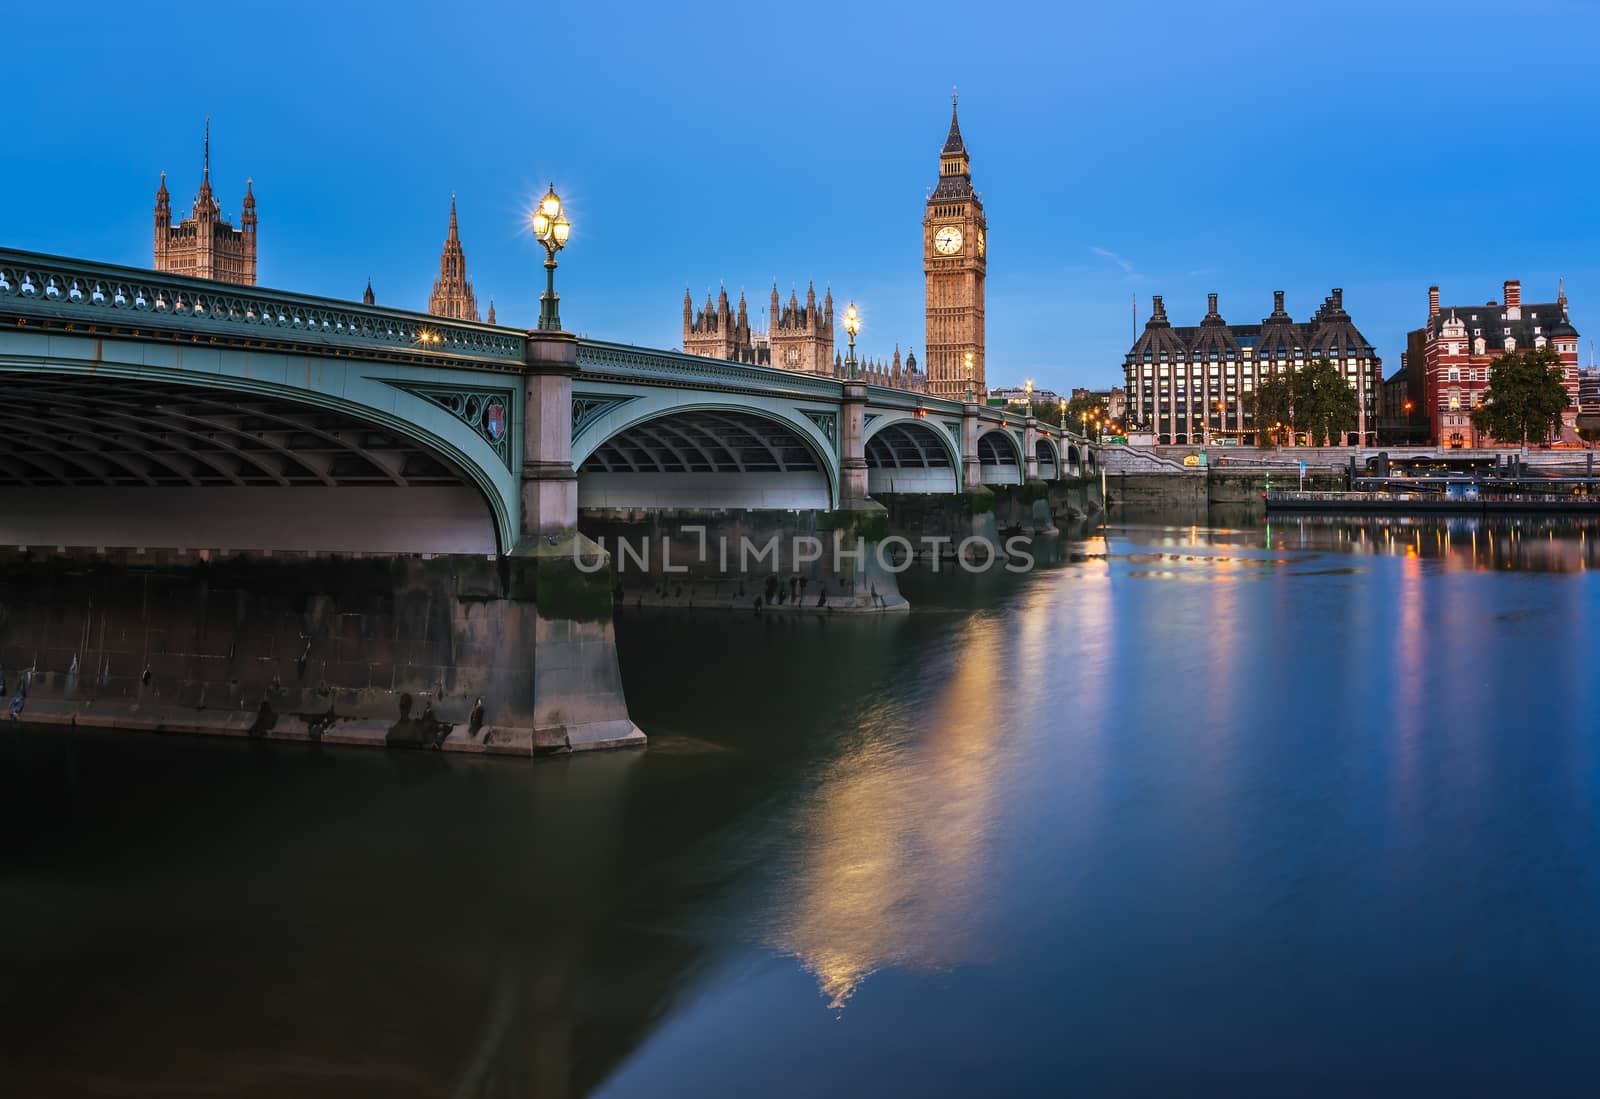 Big Ben, Queen Elizabeth Tower and Wesminster Bridge Illuminated by anshar